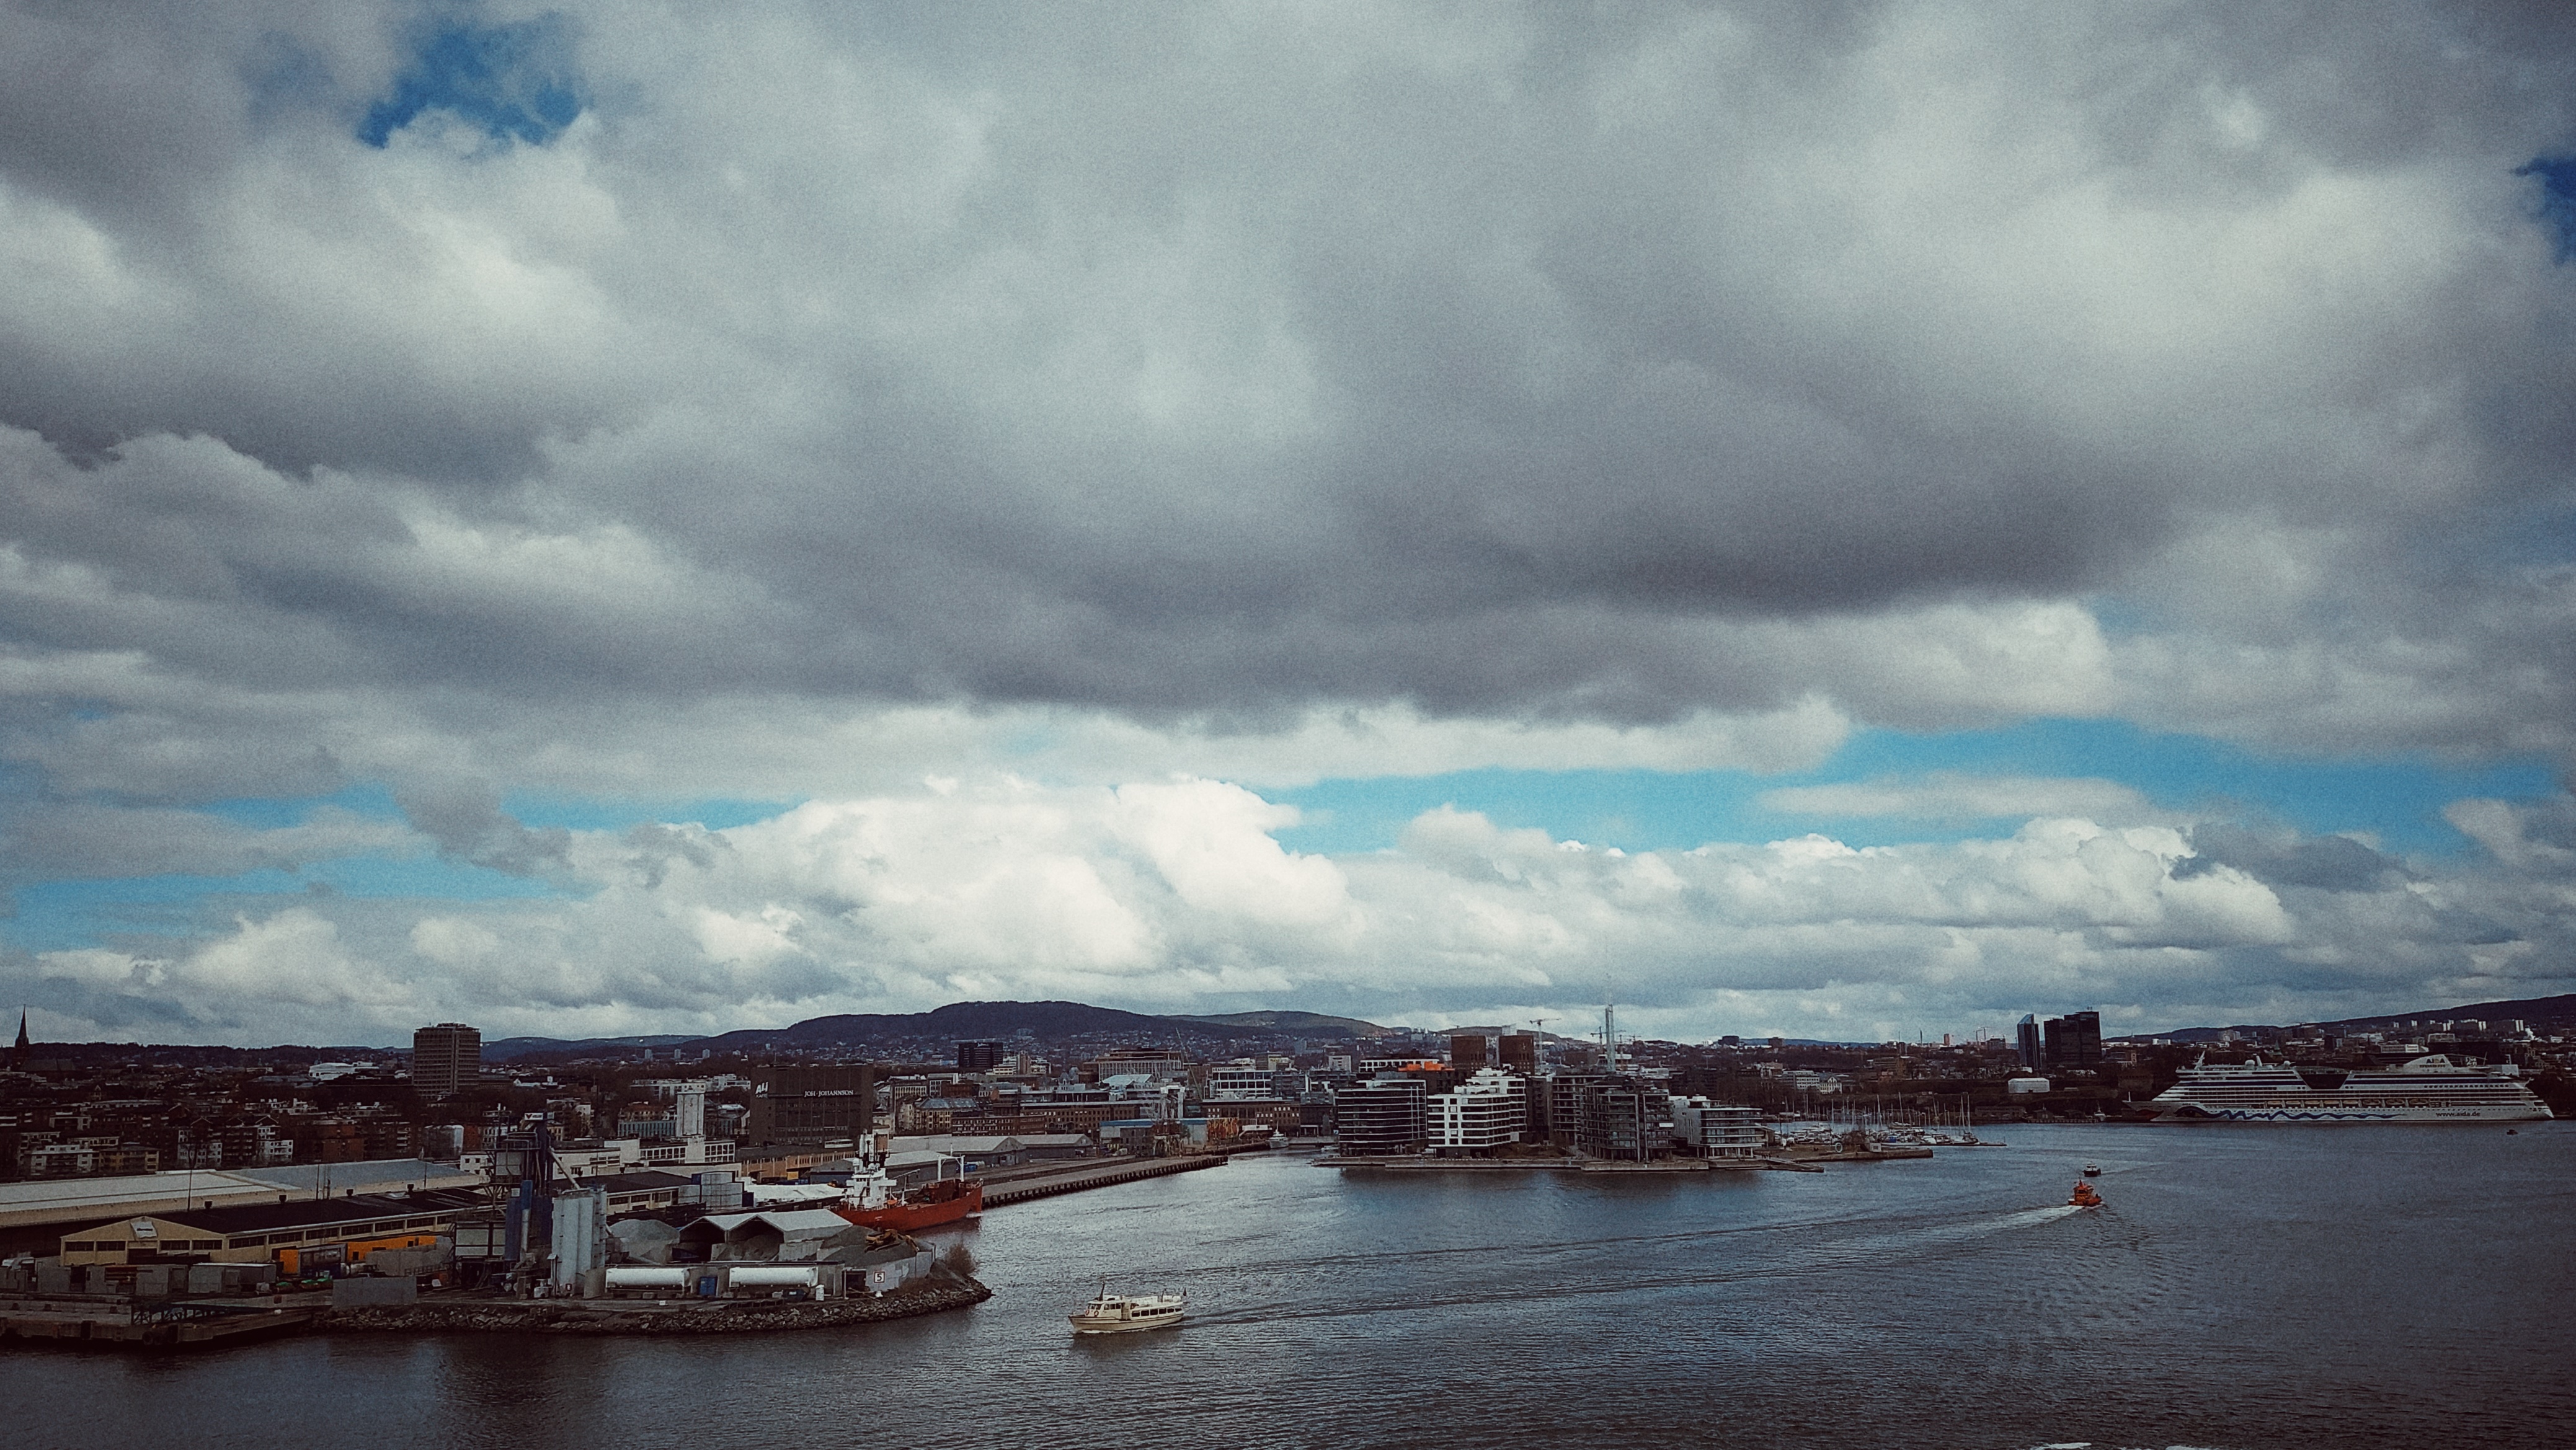 Blick über Oslo